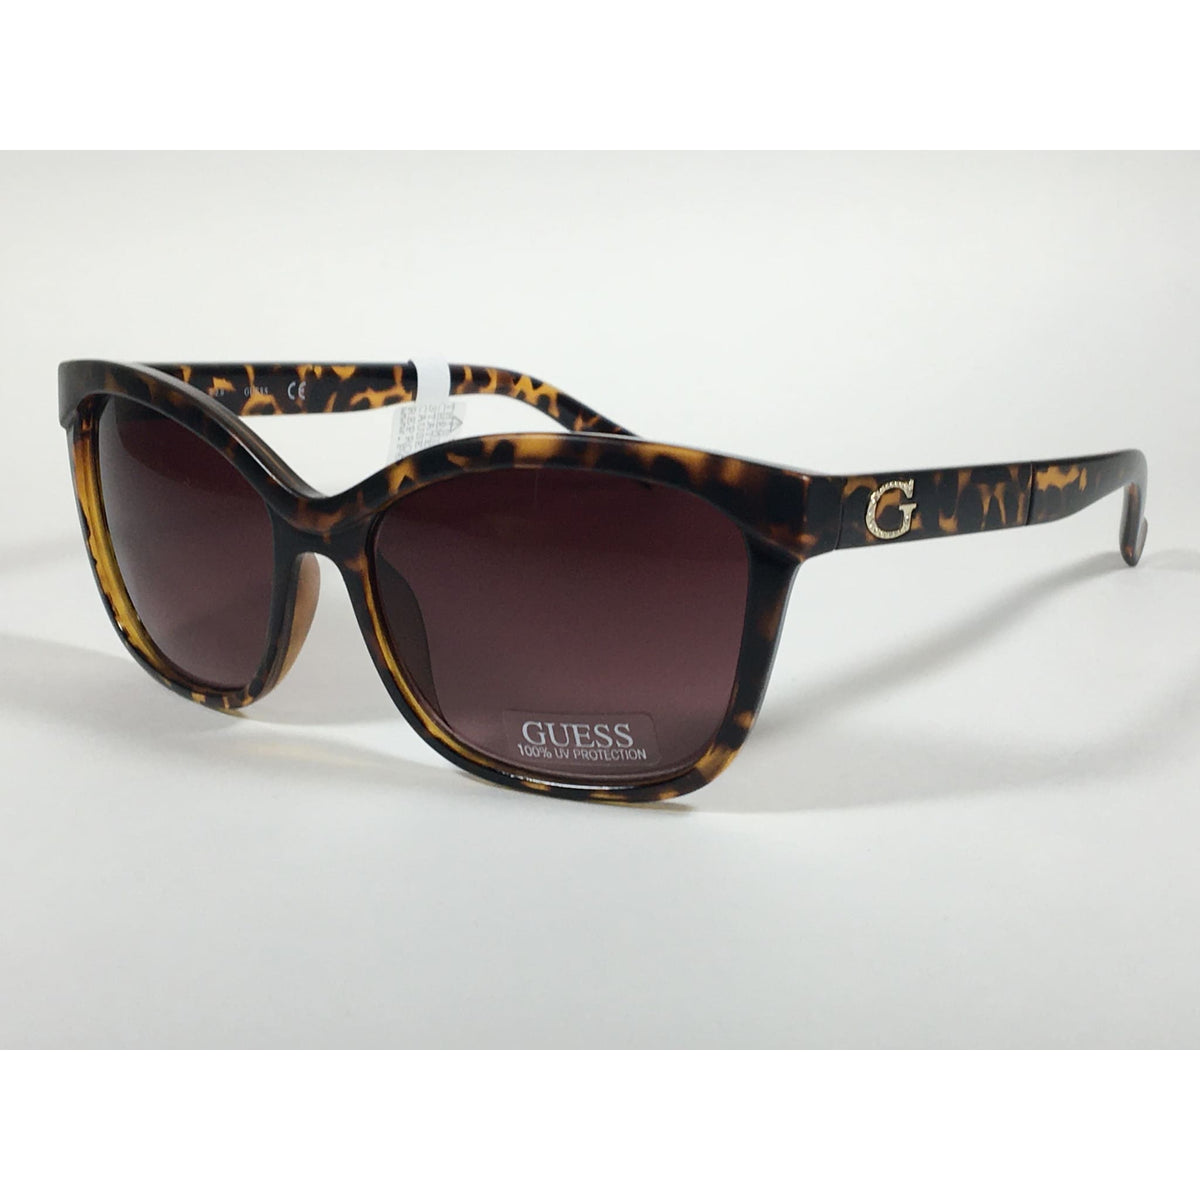 Guess Designer Sunglasses Dark Havana Brown Gradient Lens